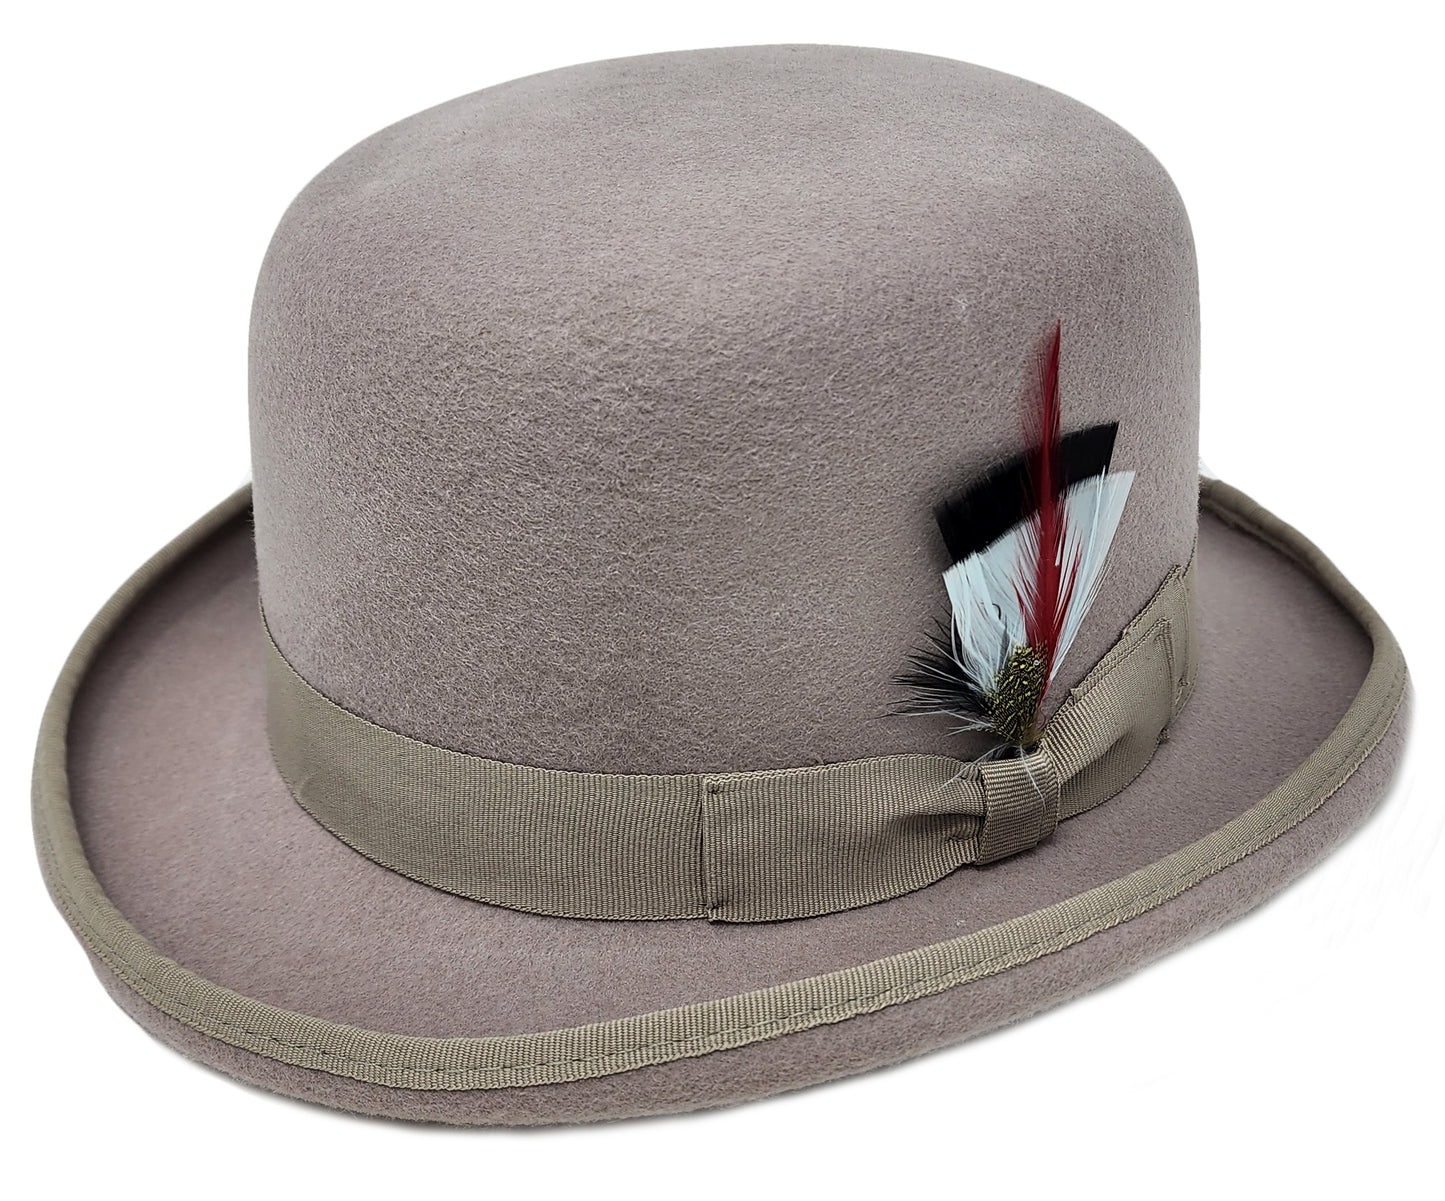 Different Touch Men's 100% Wool Felt Derby Bowler Hats